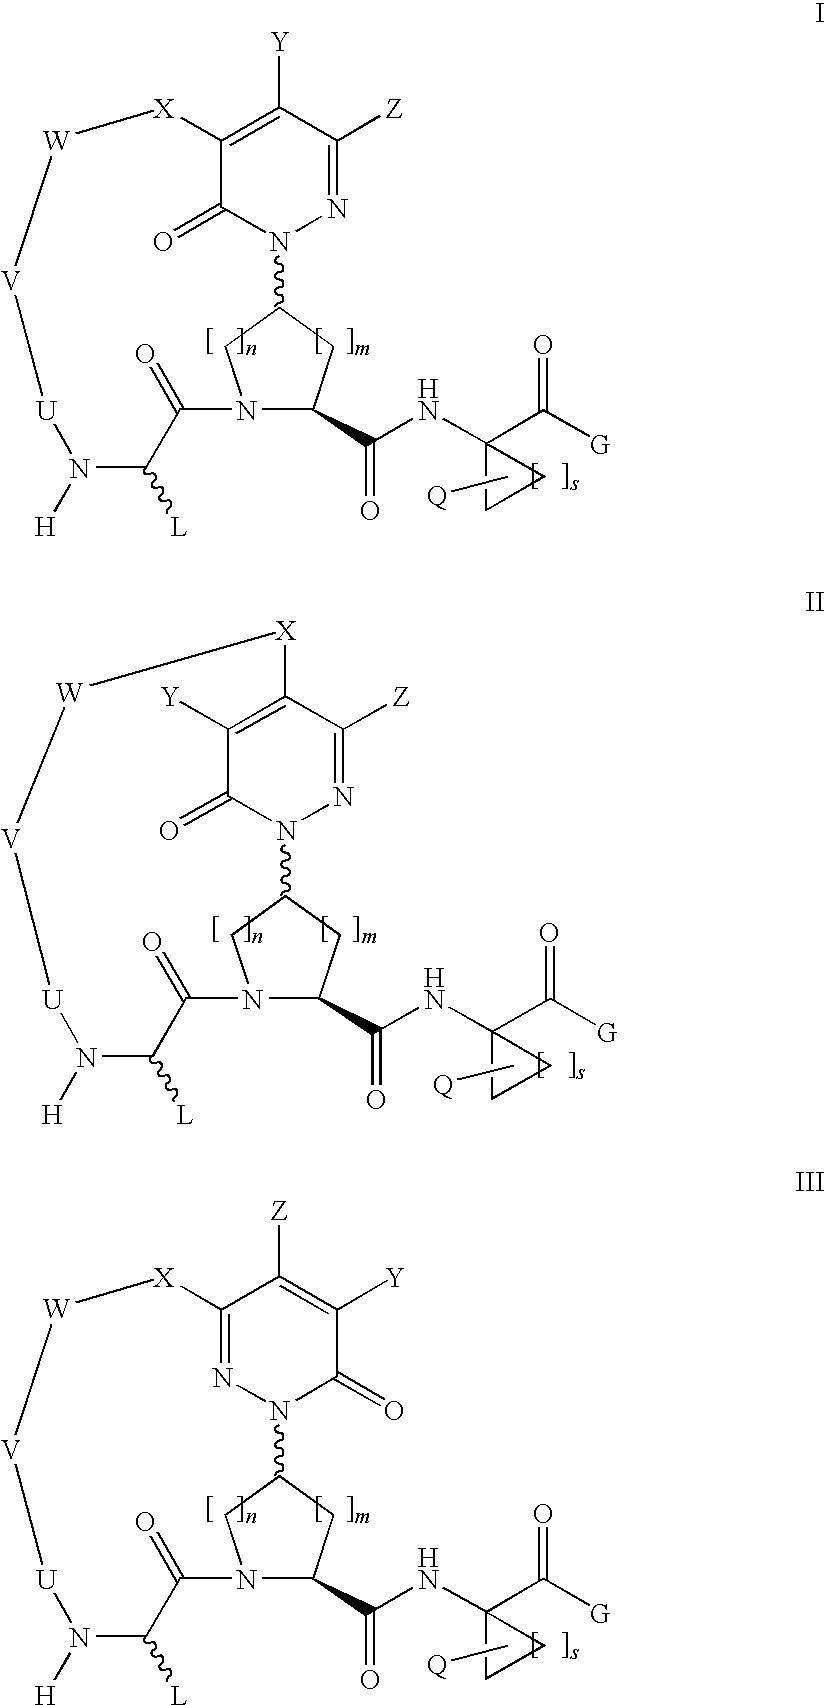 Macrocyclic, pyridazinone-containing hepatitis c serine protease inhibitors